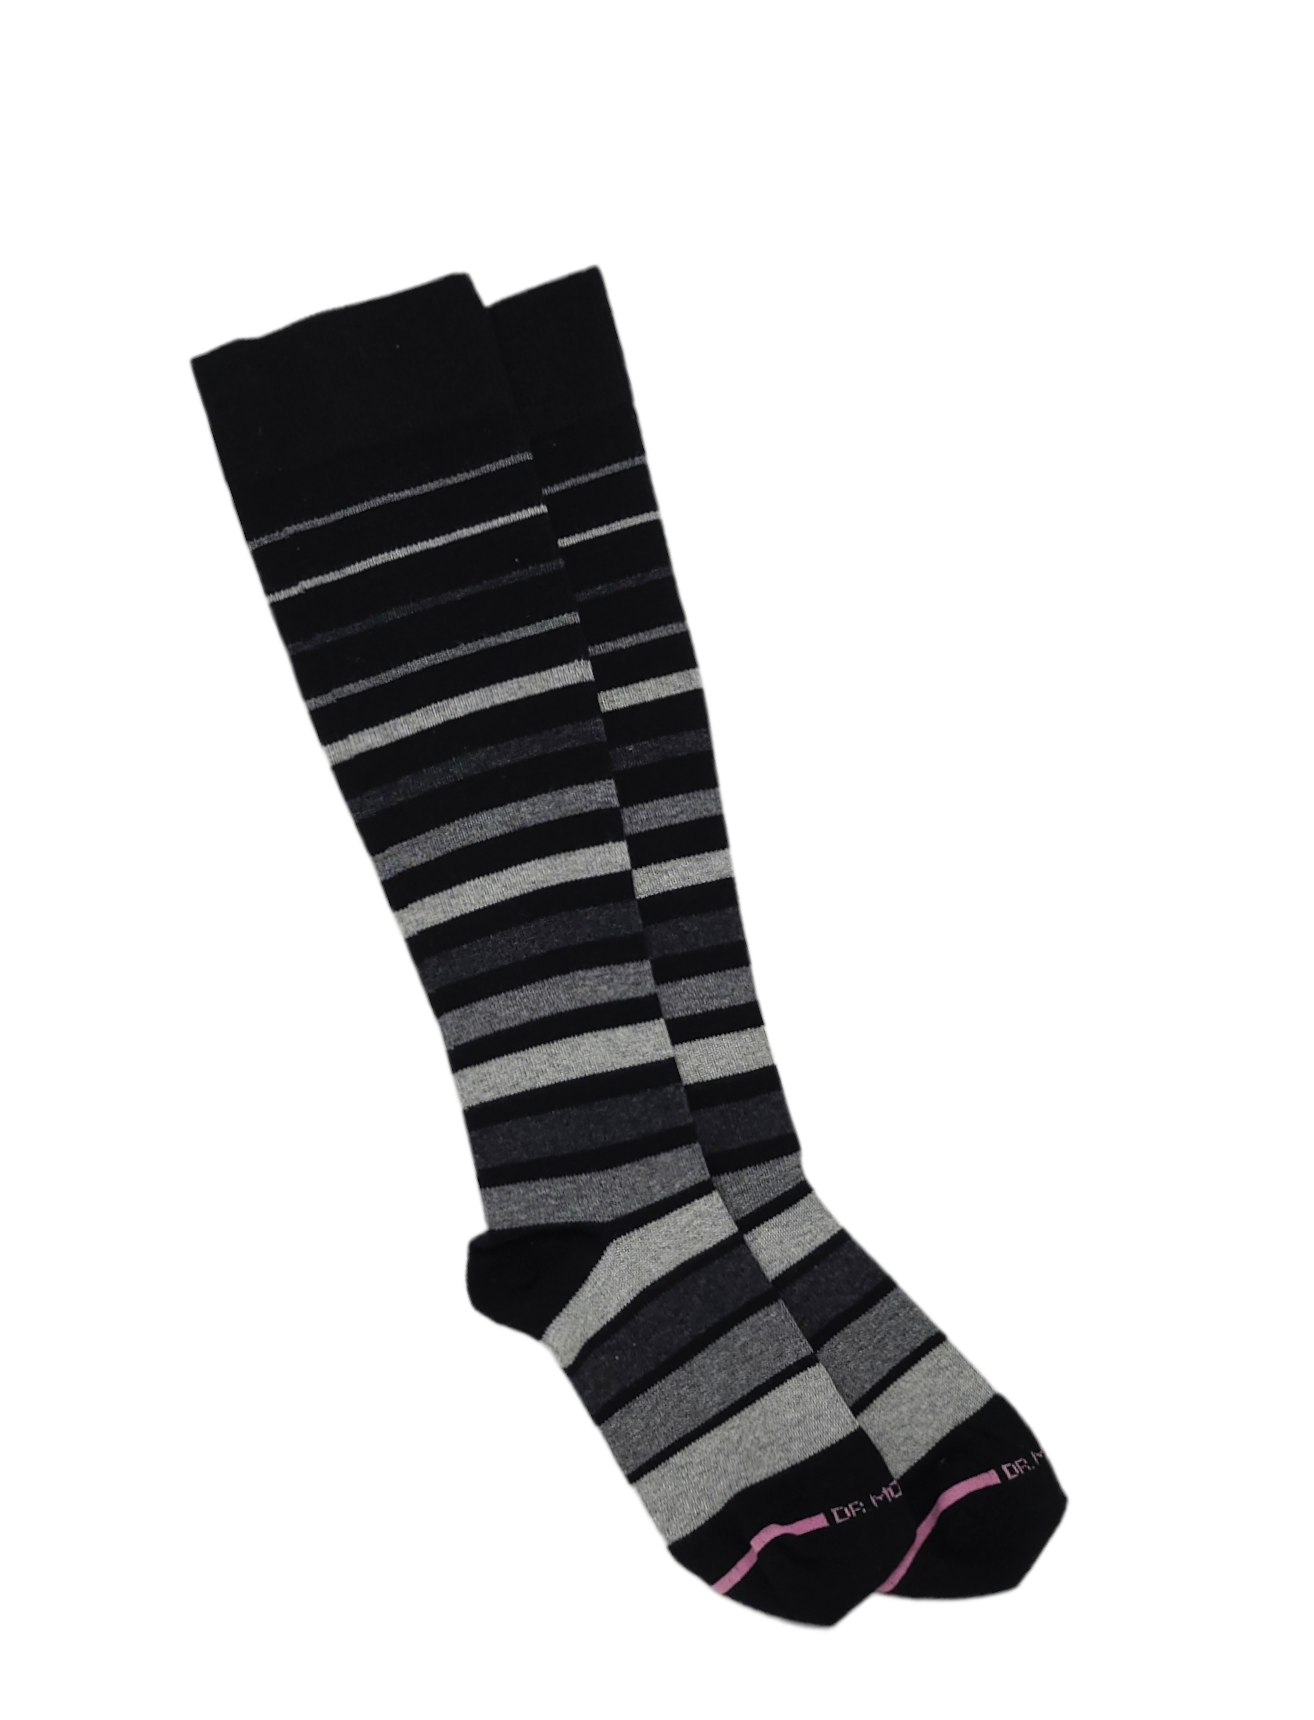 Knee High Compression Socks | Block Stripes | Women's (1 Pair)